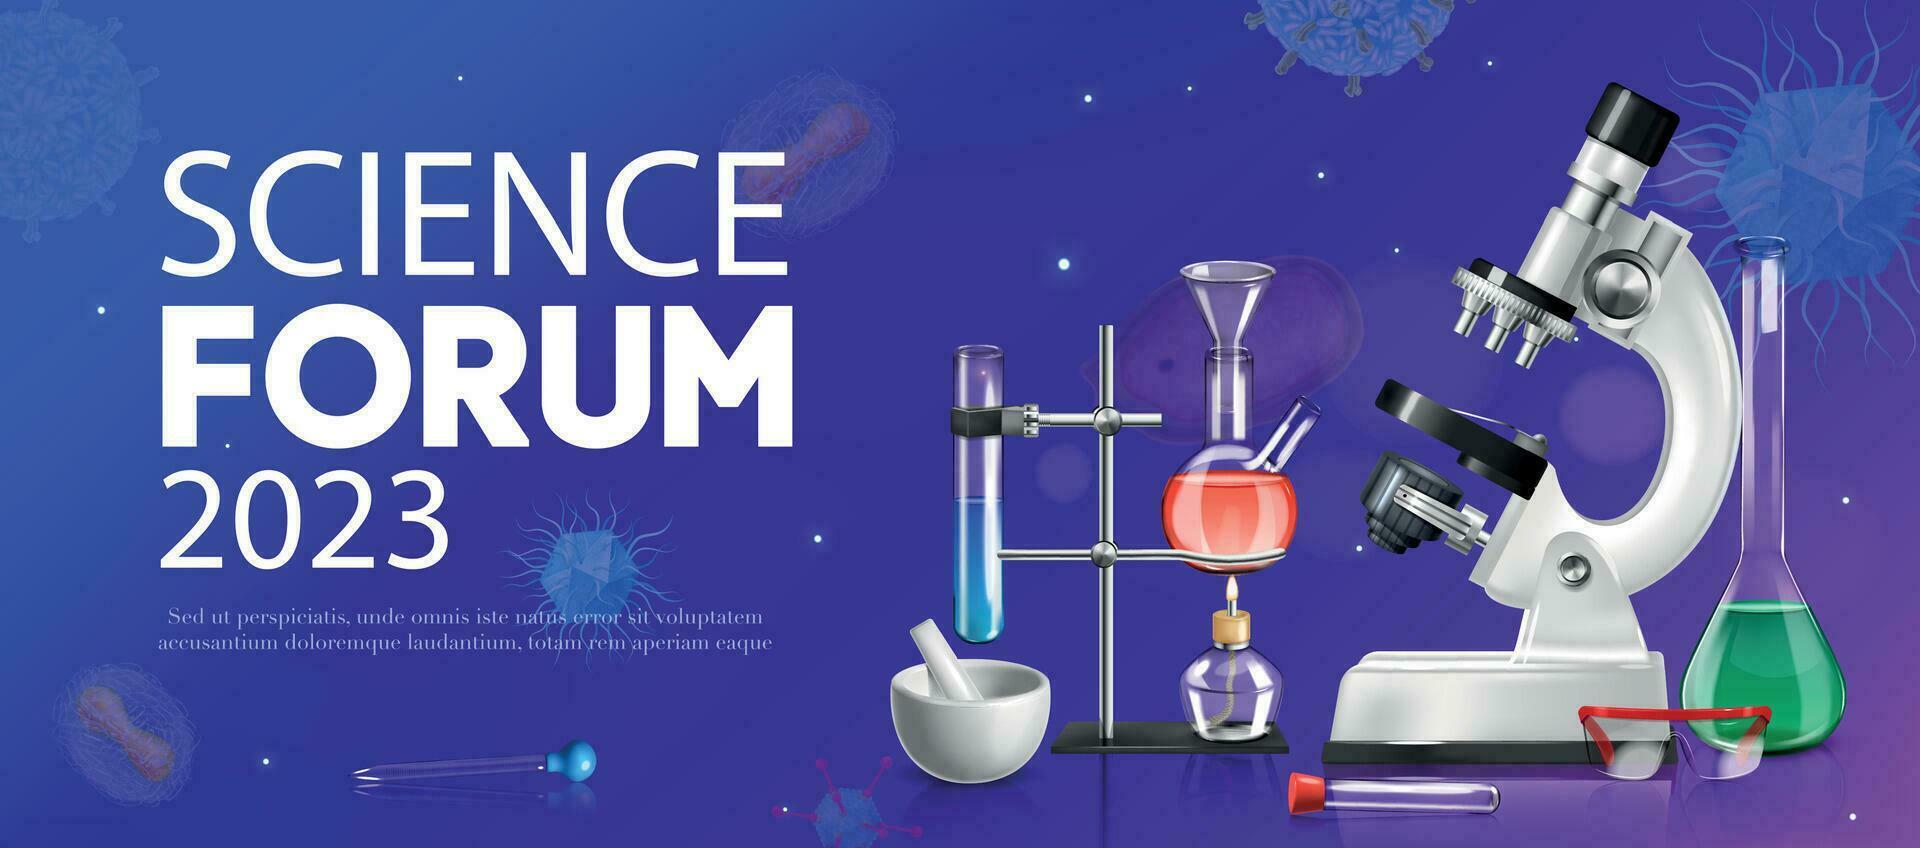 Science Forum 2023 Horizontal Poster vector